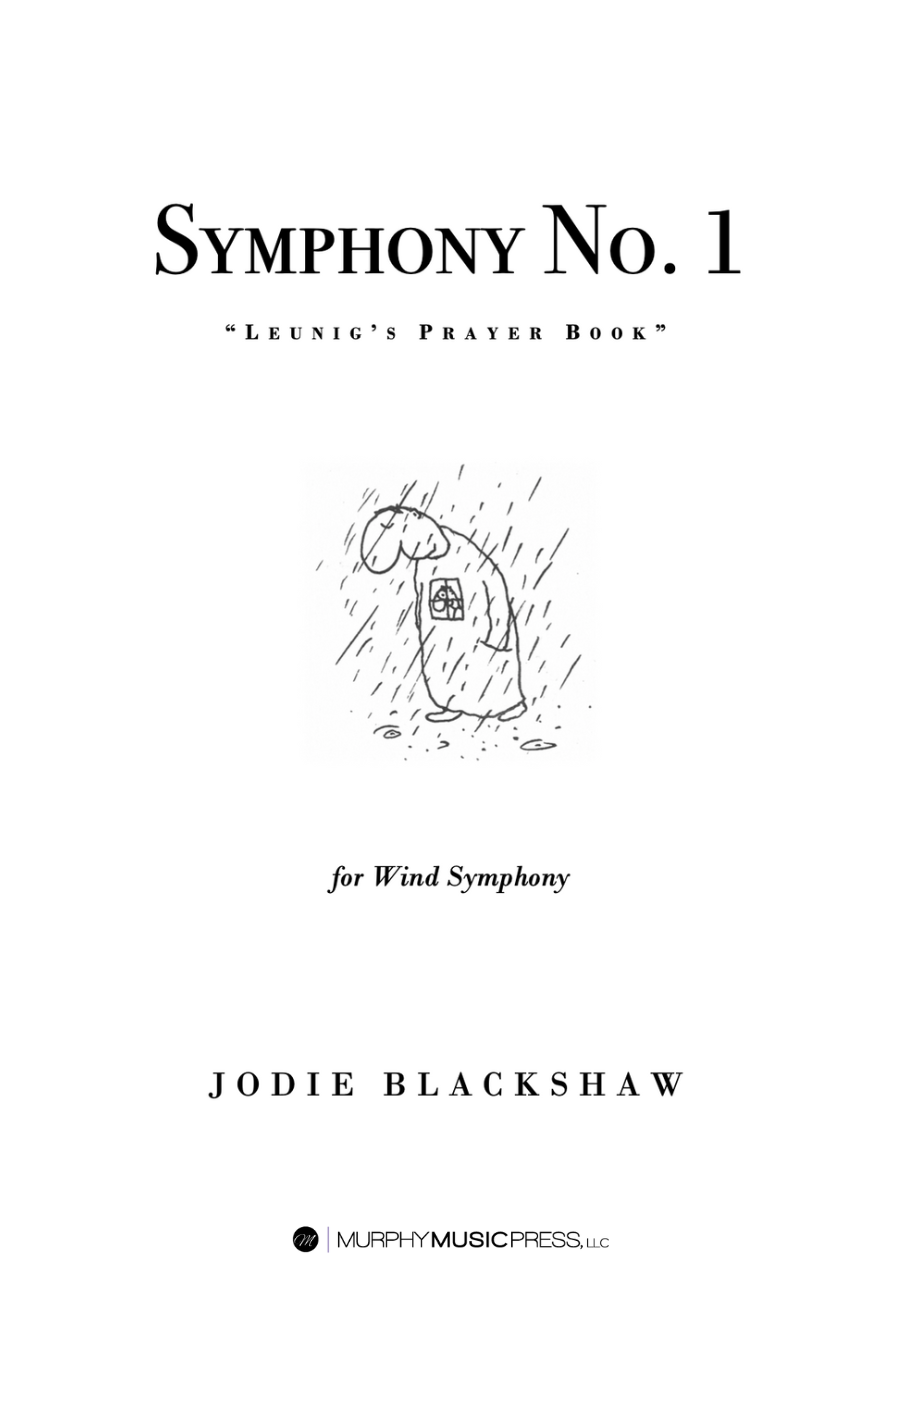 Symphony No. 1, Leunig's Prayer Book by Jodie Blackshaw